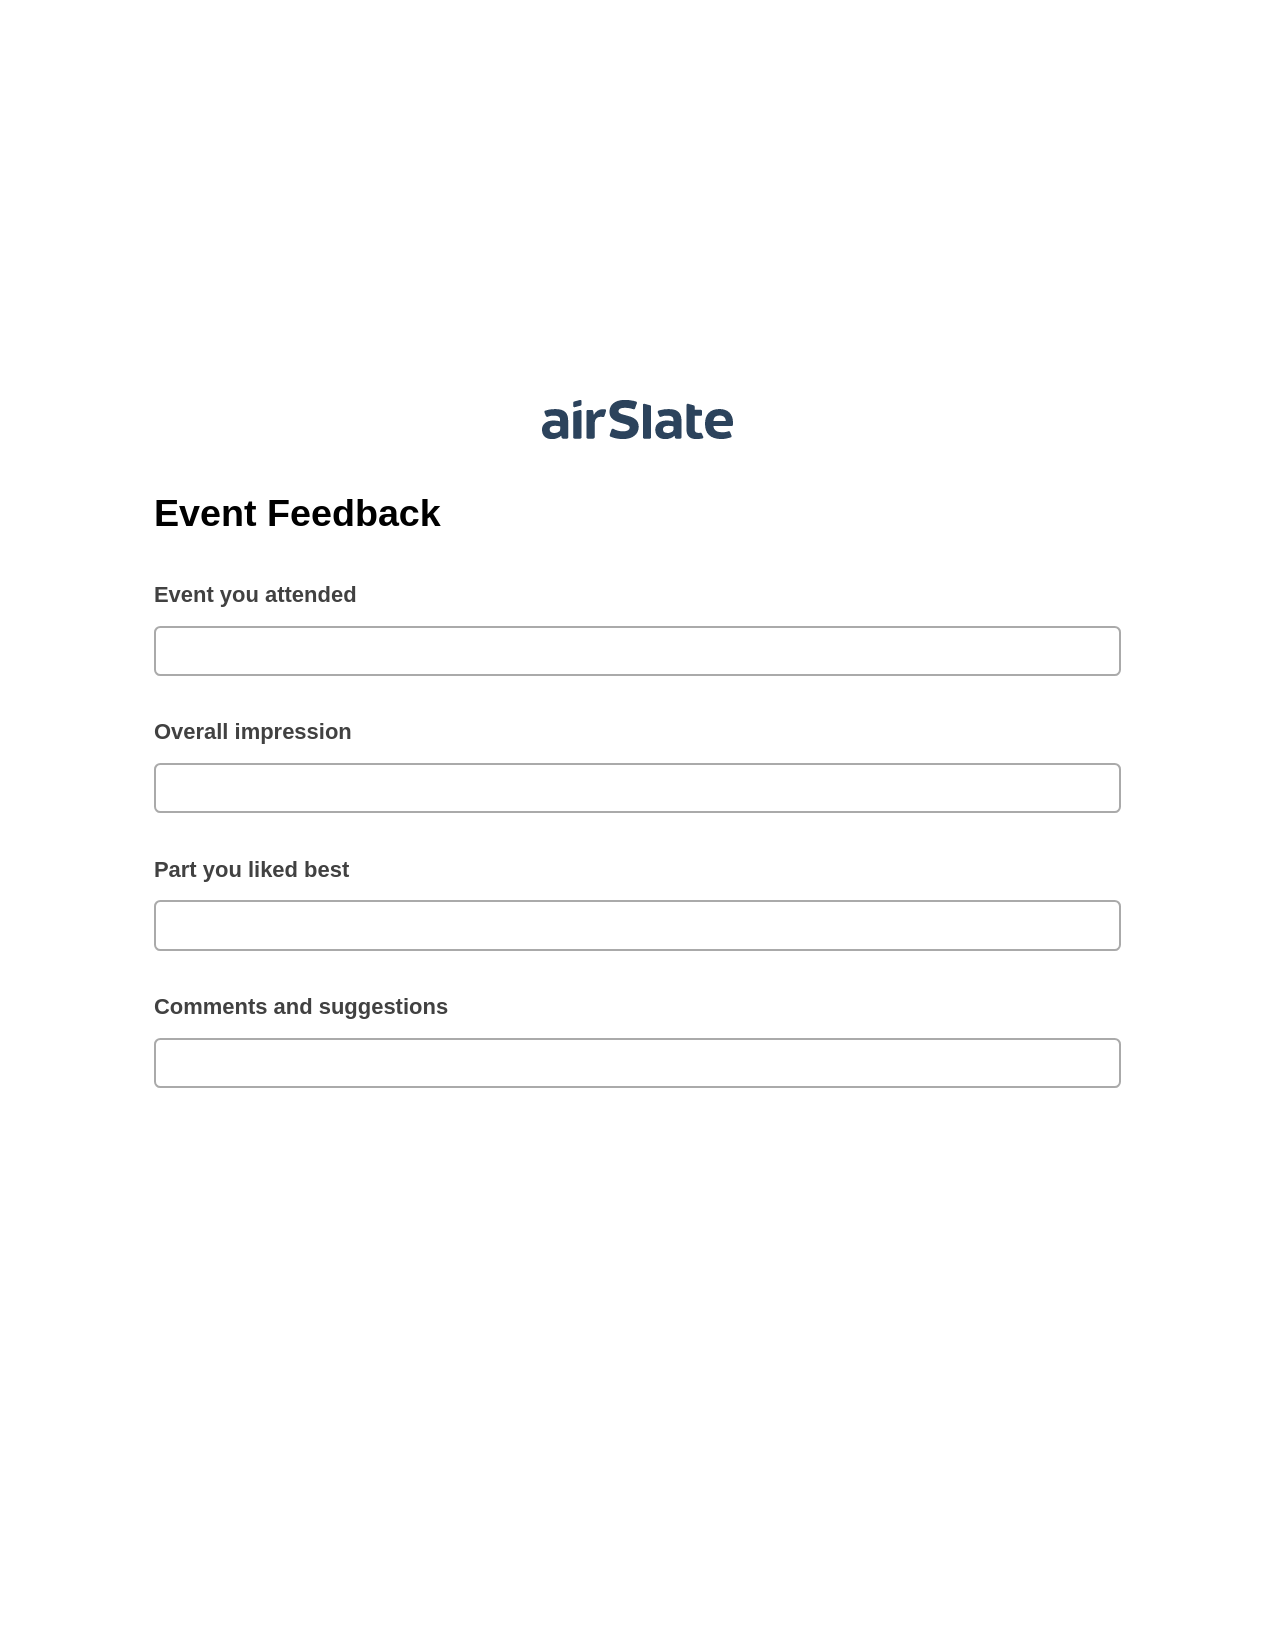 Event Feedback Pre-fill Slate from MS Dynamics 365 Records Bot, SendGrid send Campaign bot, Dropbox Bot